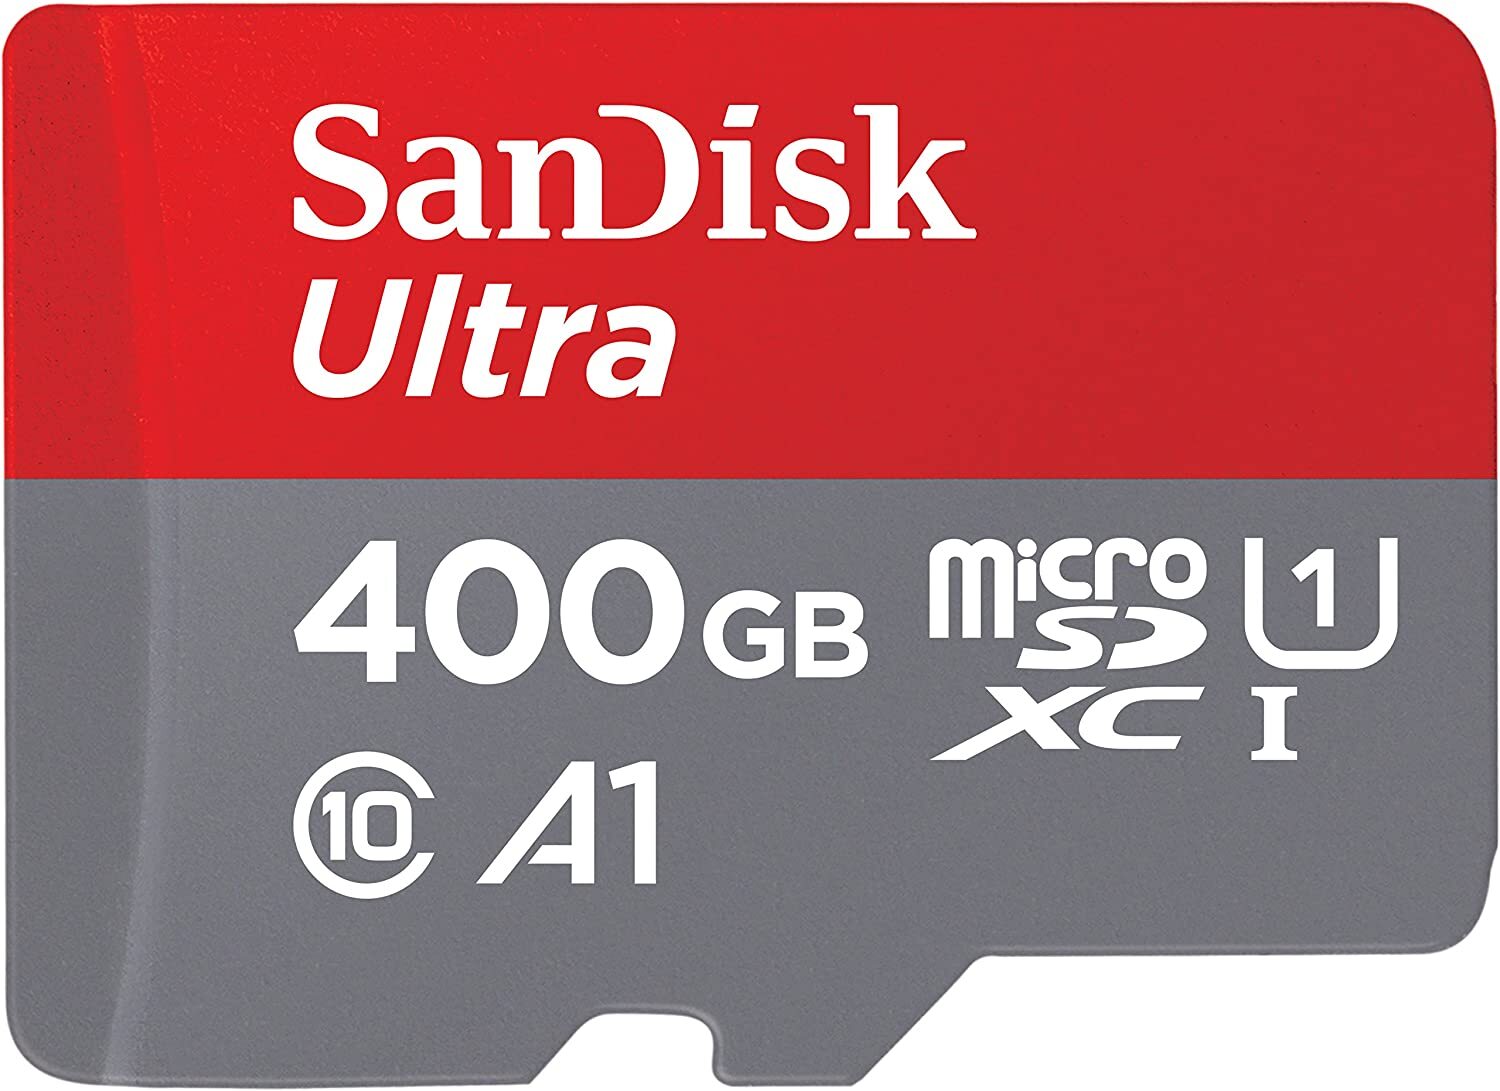 SanDisk Ultra 400GB Micro SD Card